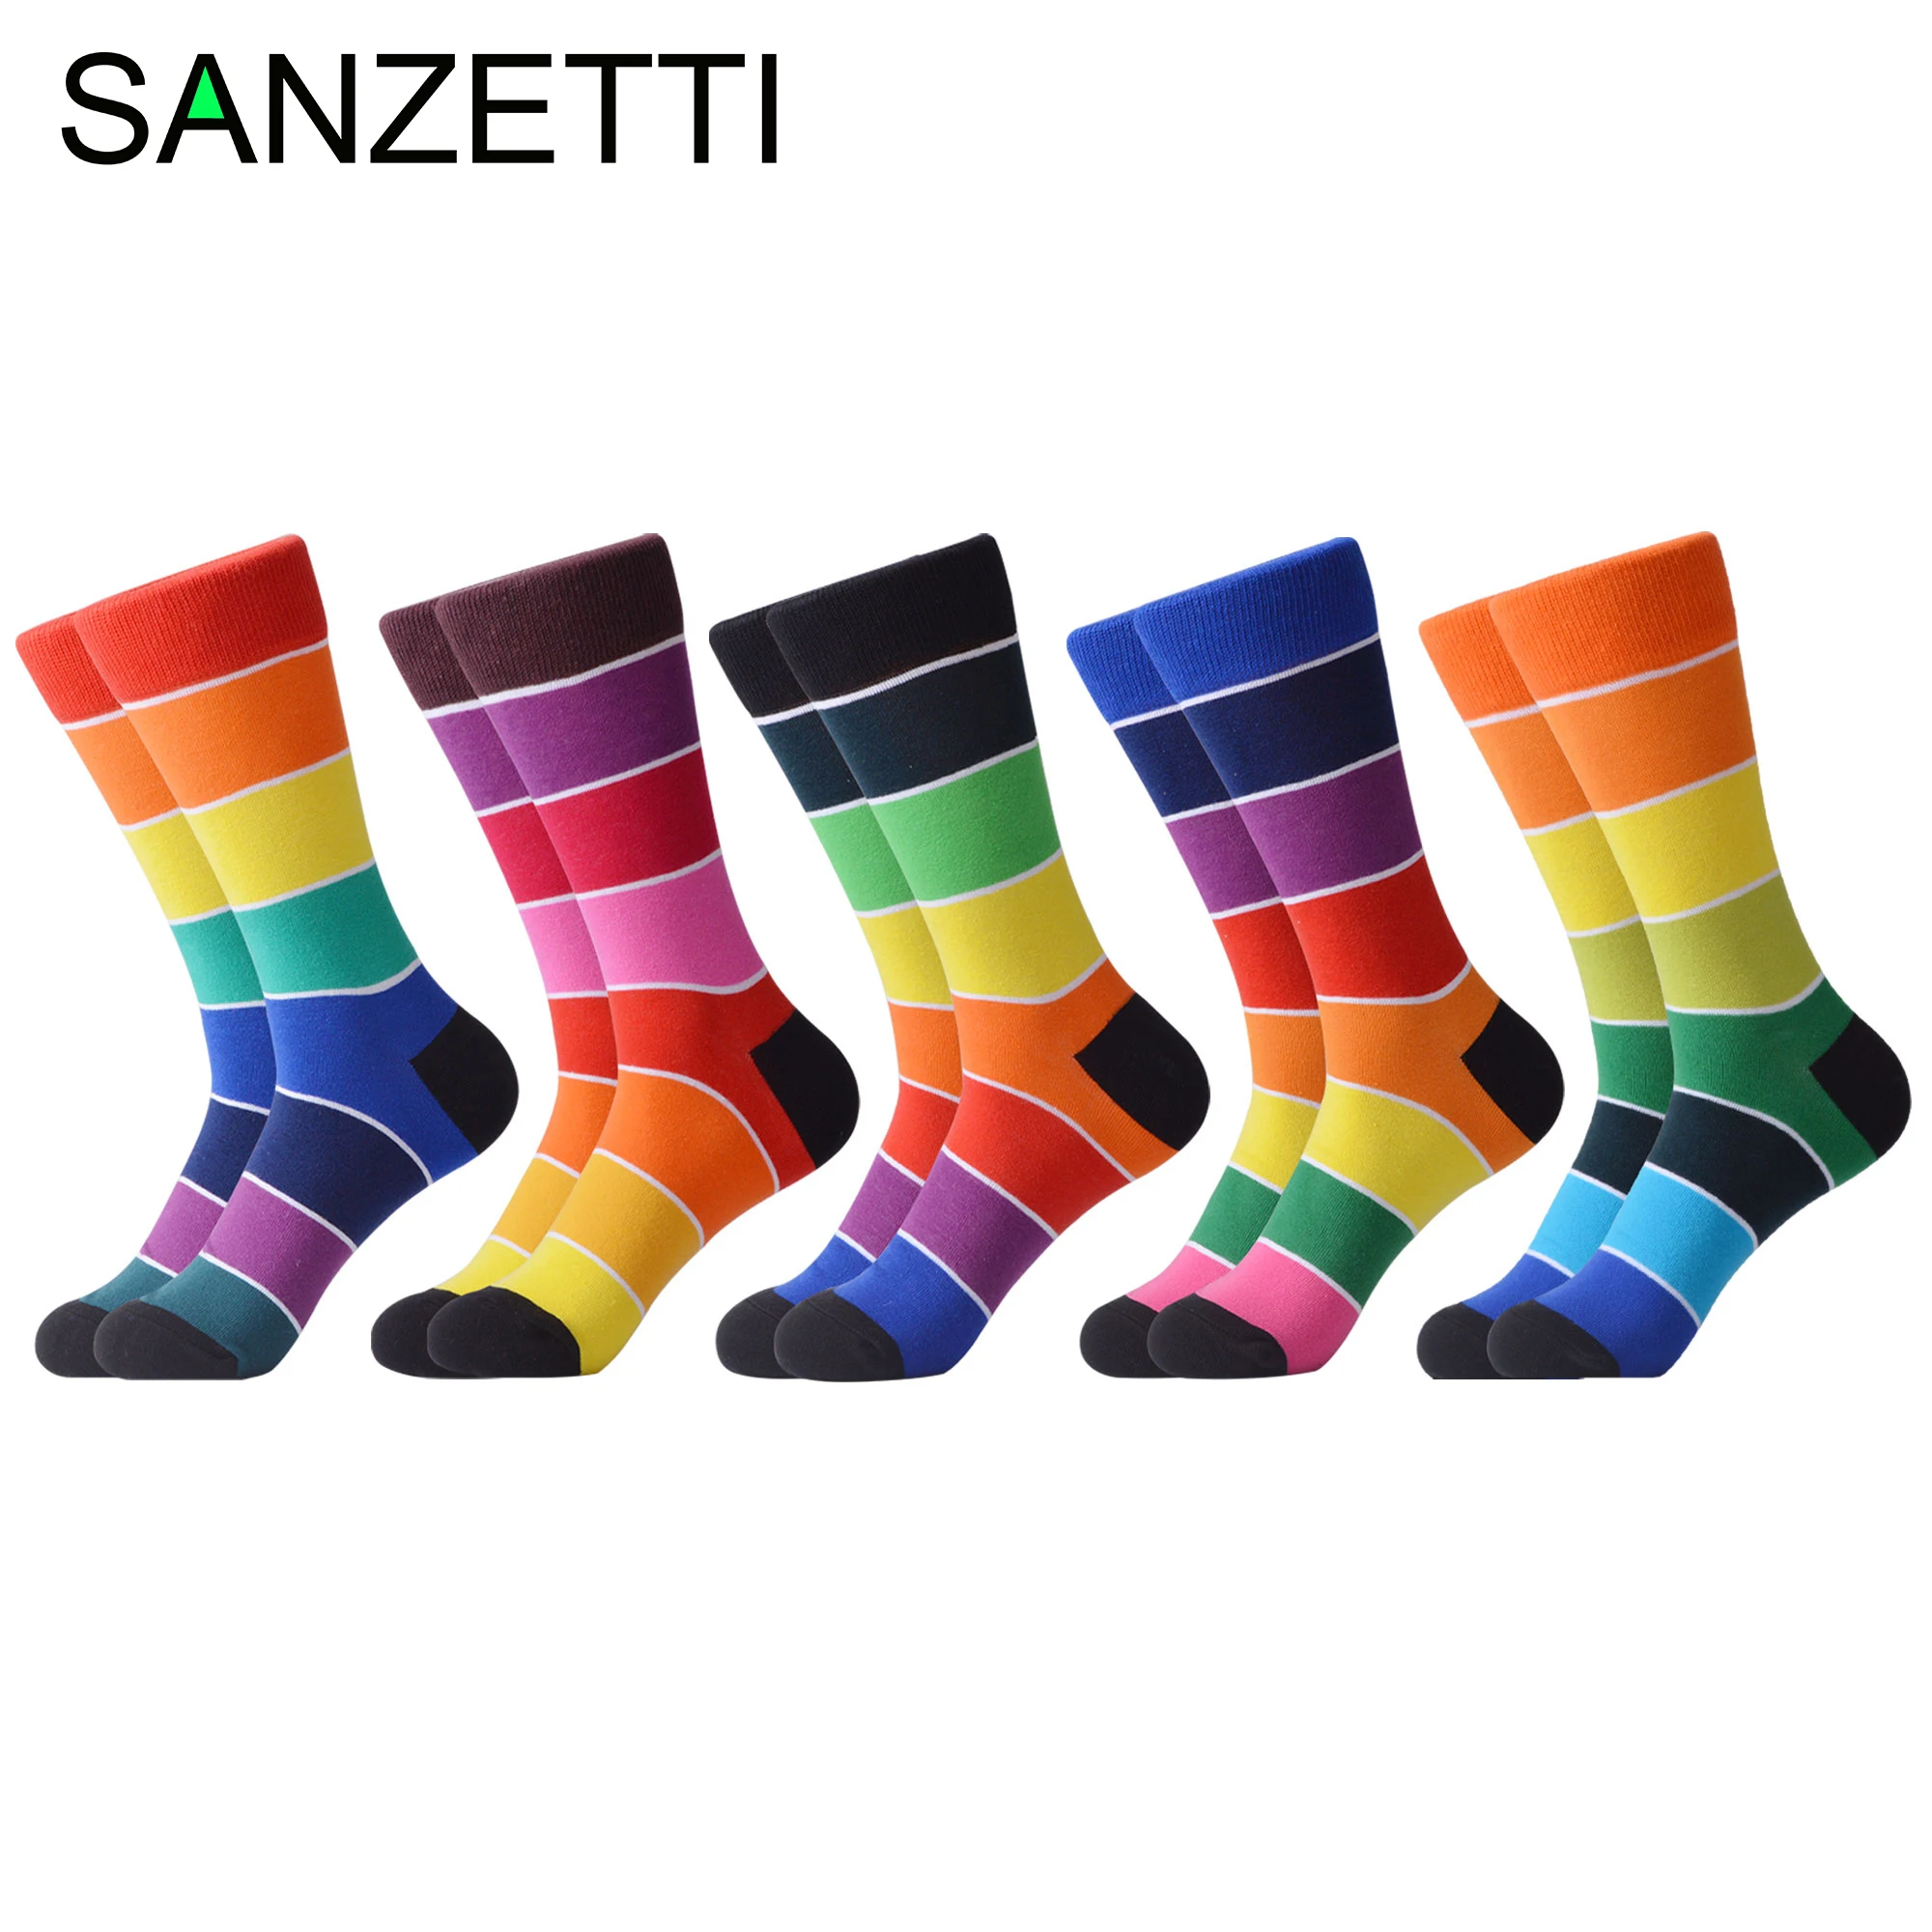 

SANZETTI 5 Pairs/Lot New Style Rainbow Socks Men Women Happy Colourful Combed Cotton Crew Socks Party Gifts Creative Socks Free